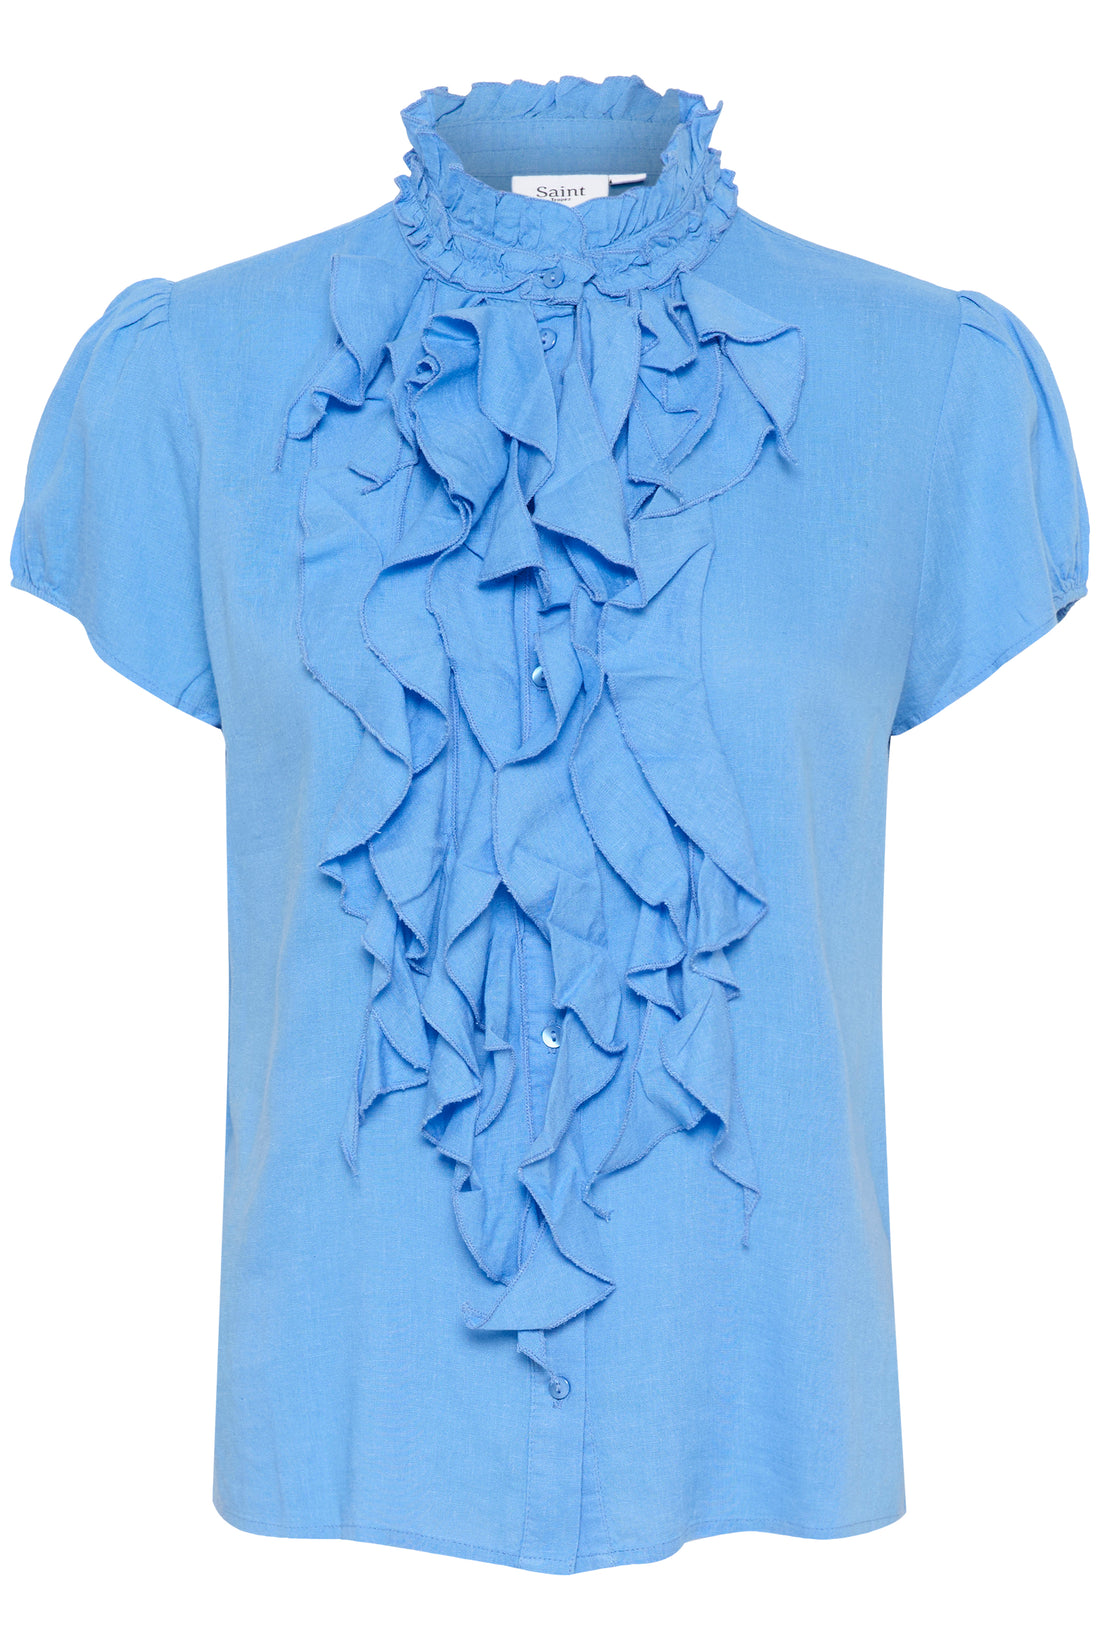 Saint Tropez Elli Shirt in Provence Blue